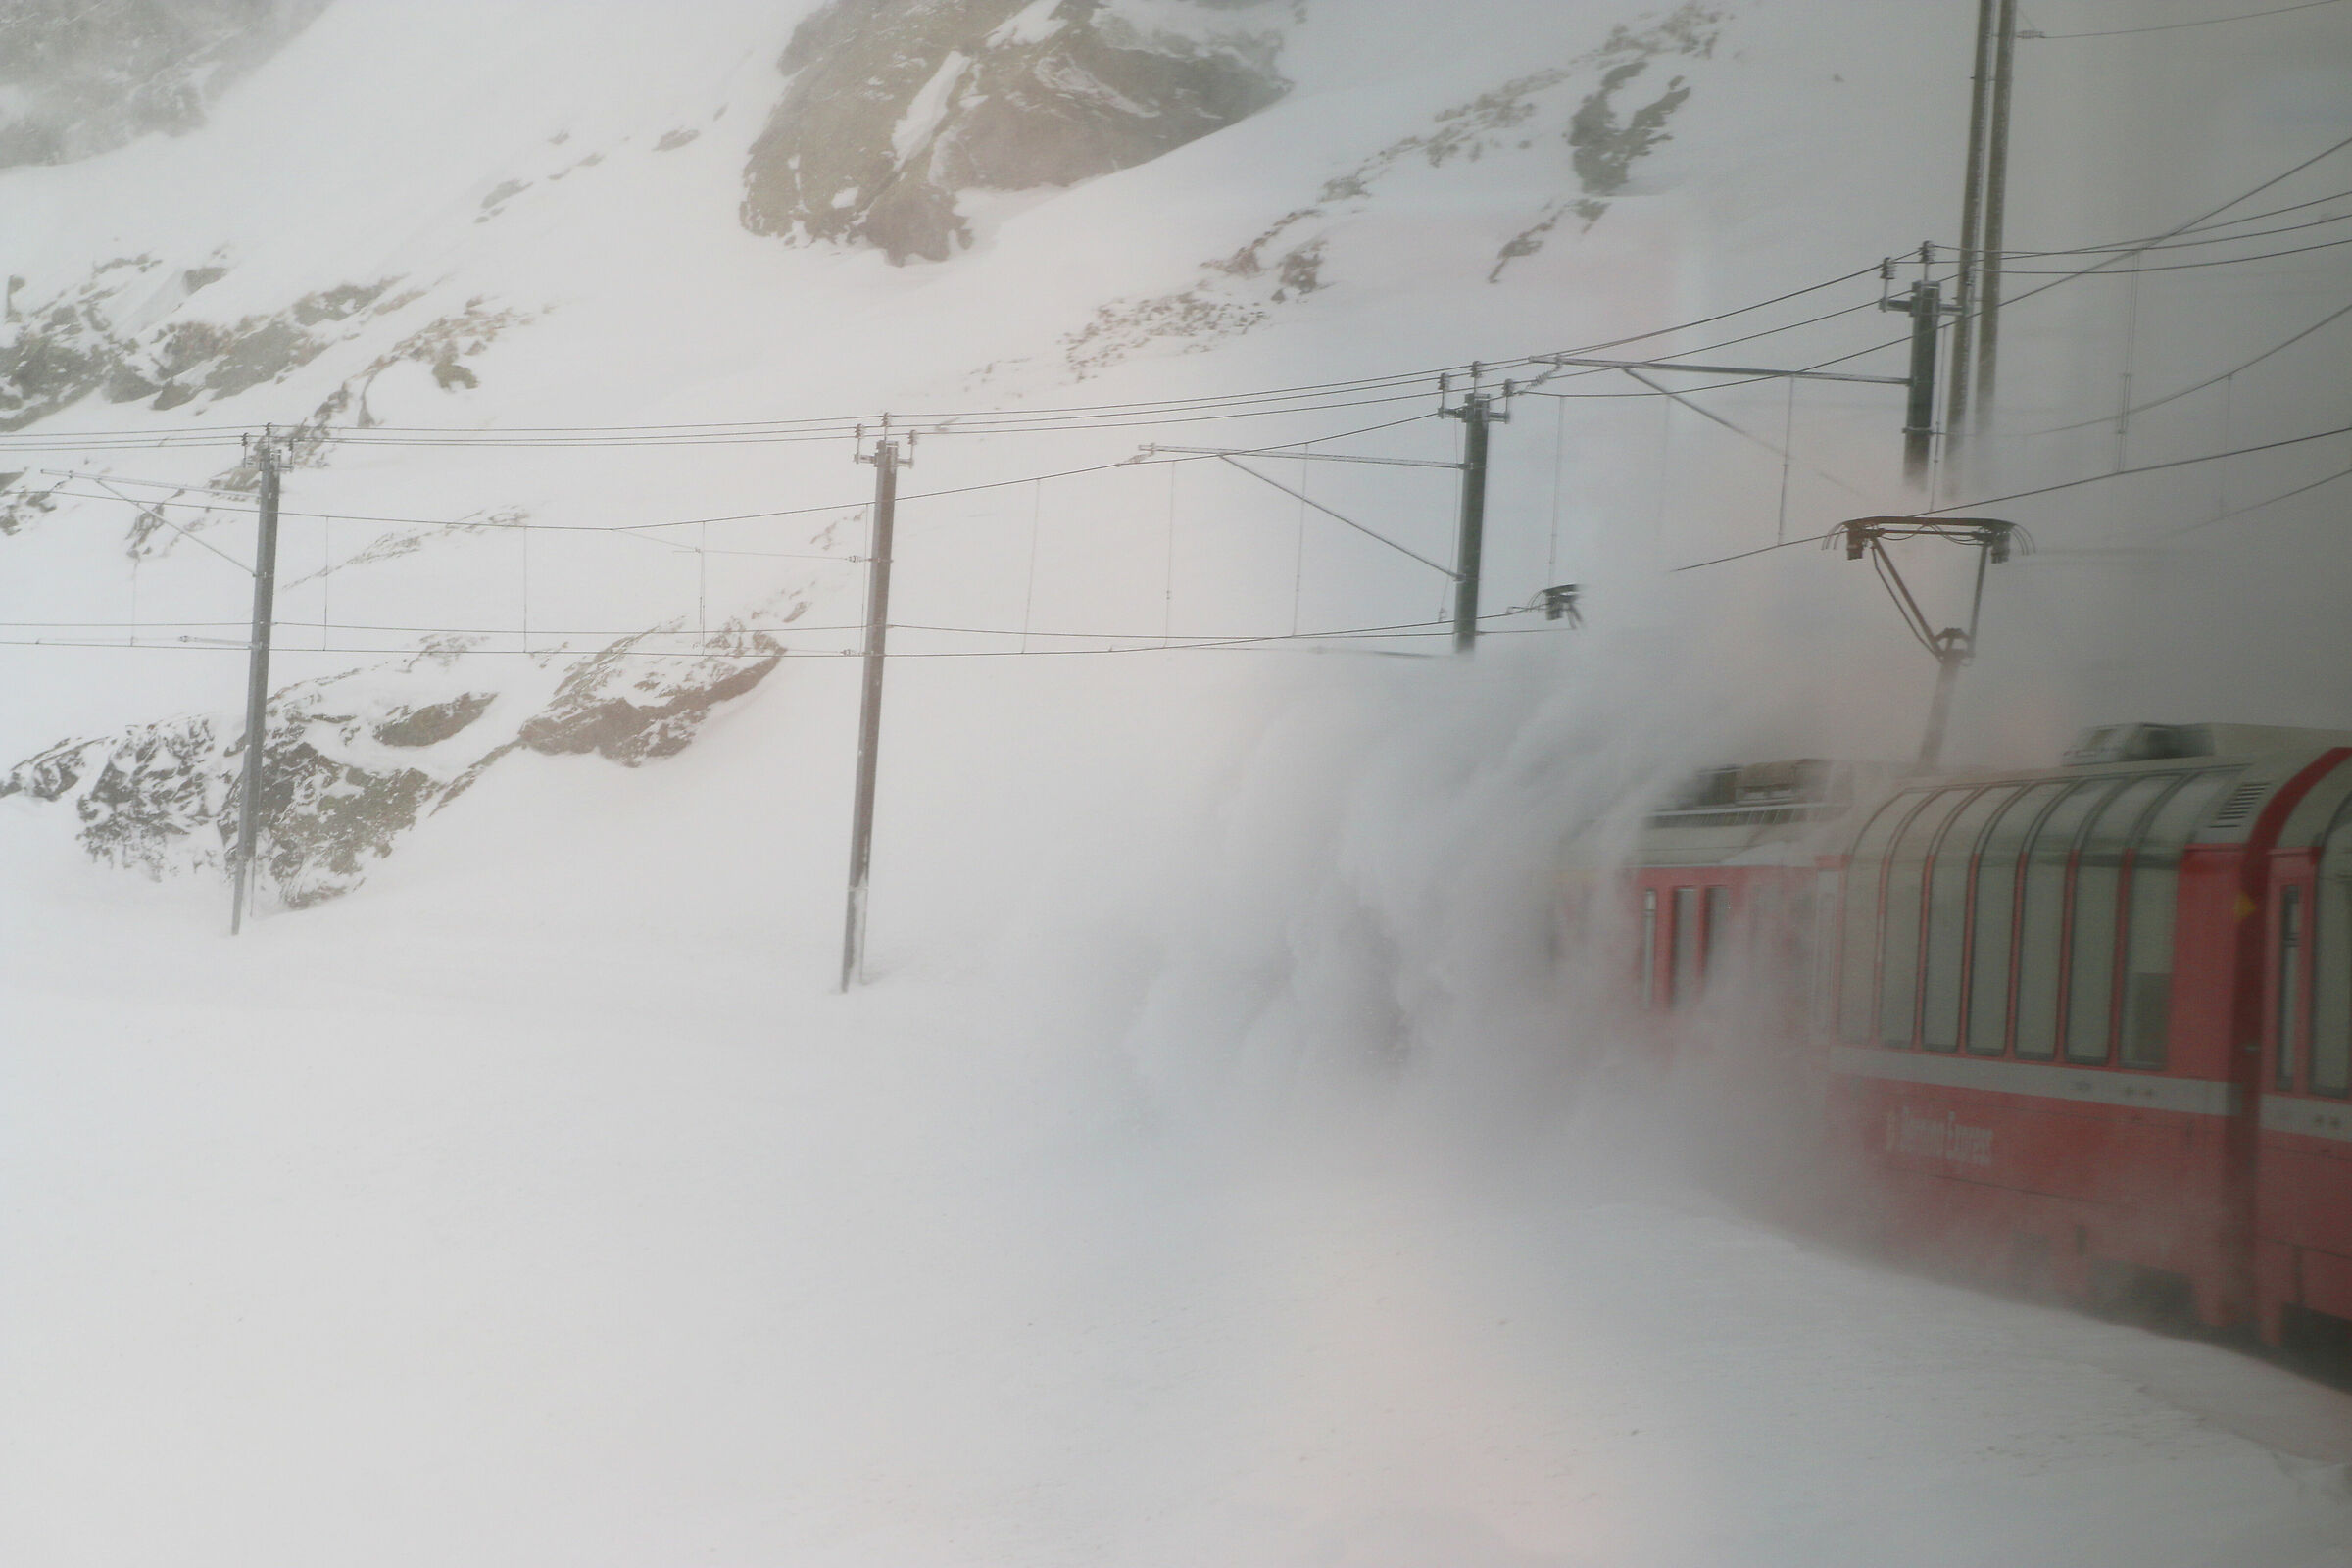 Winter by train bernina (Switzerland)...